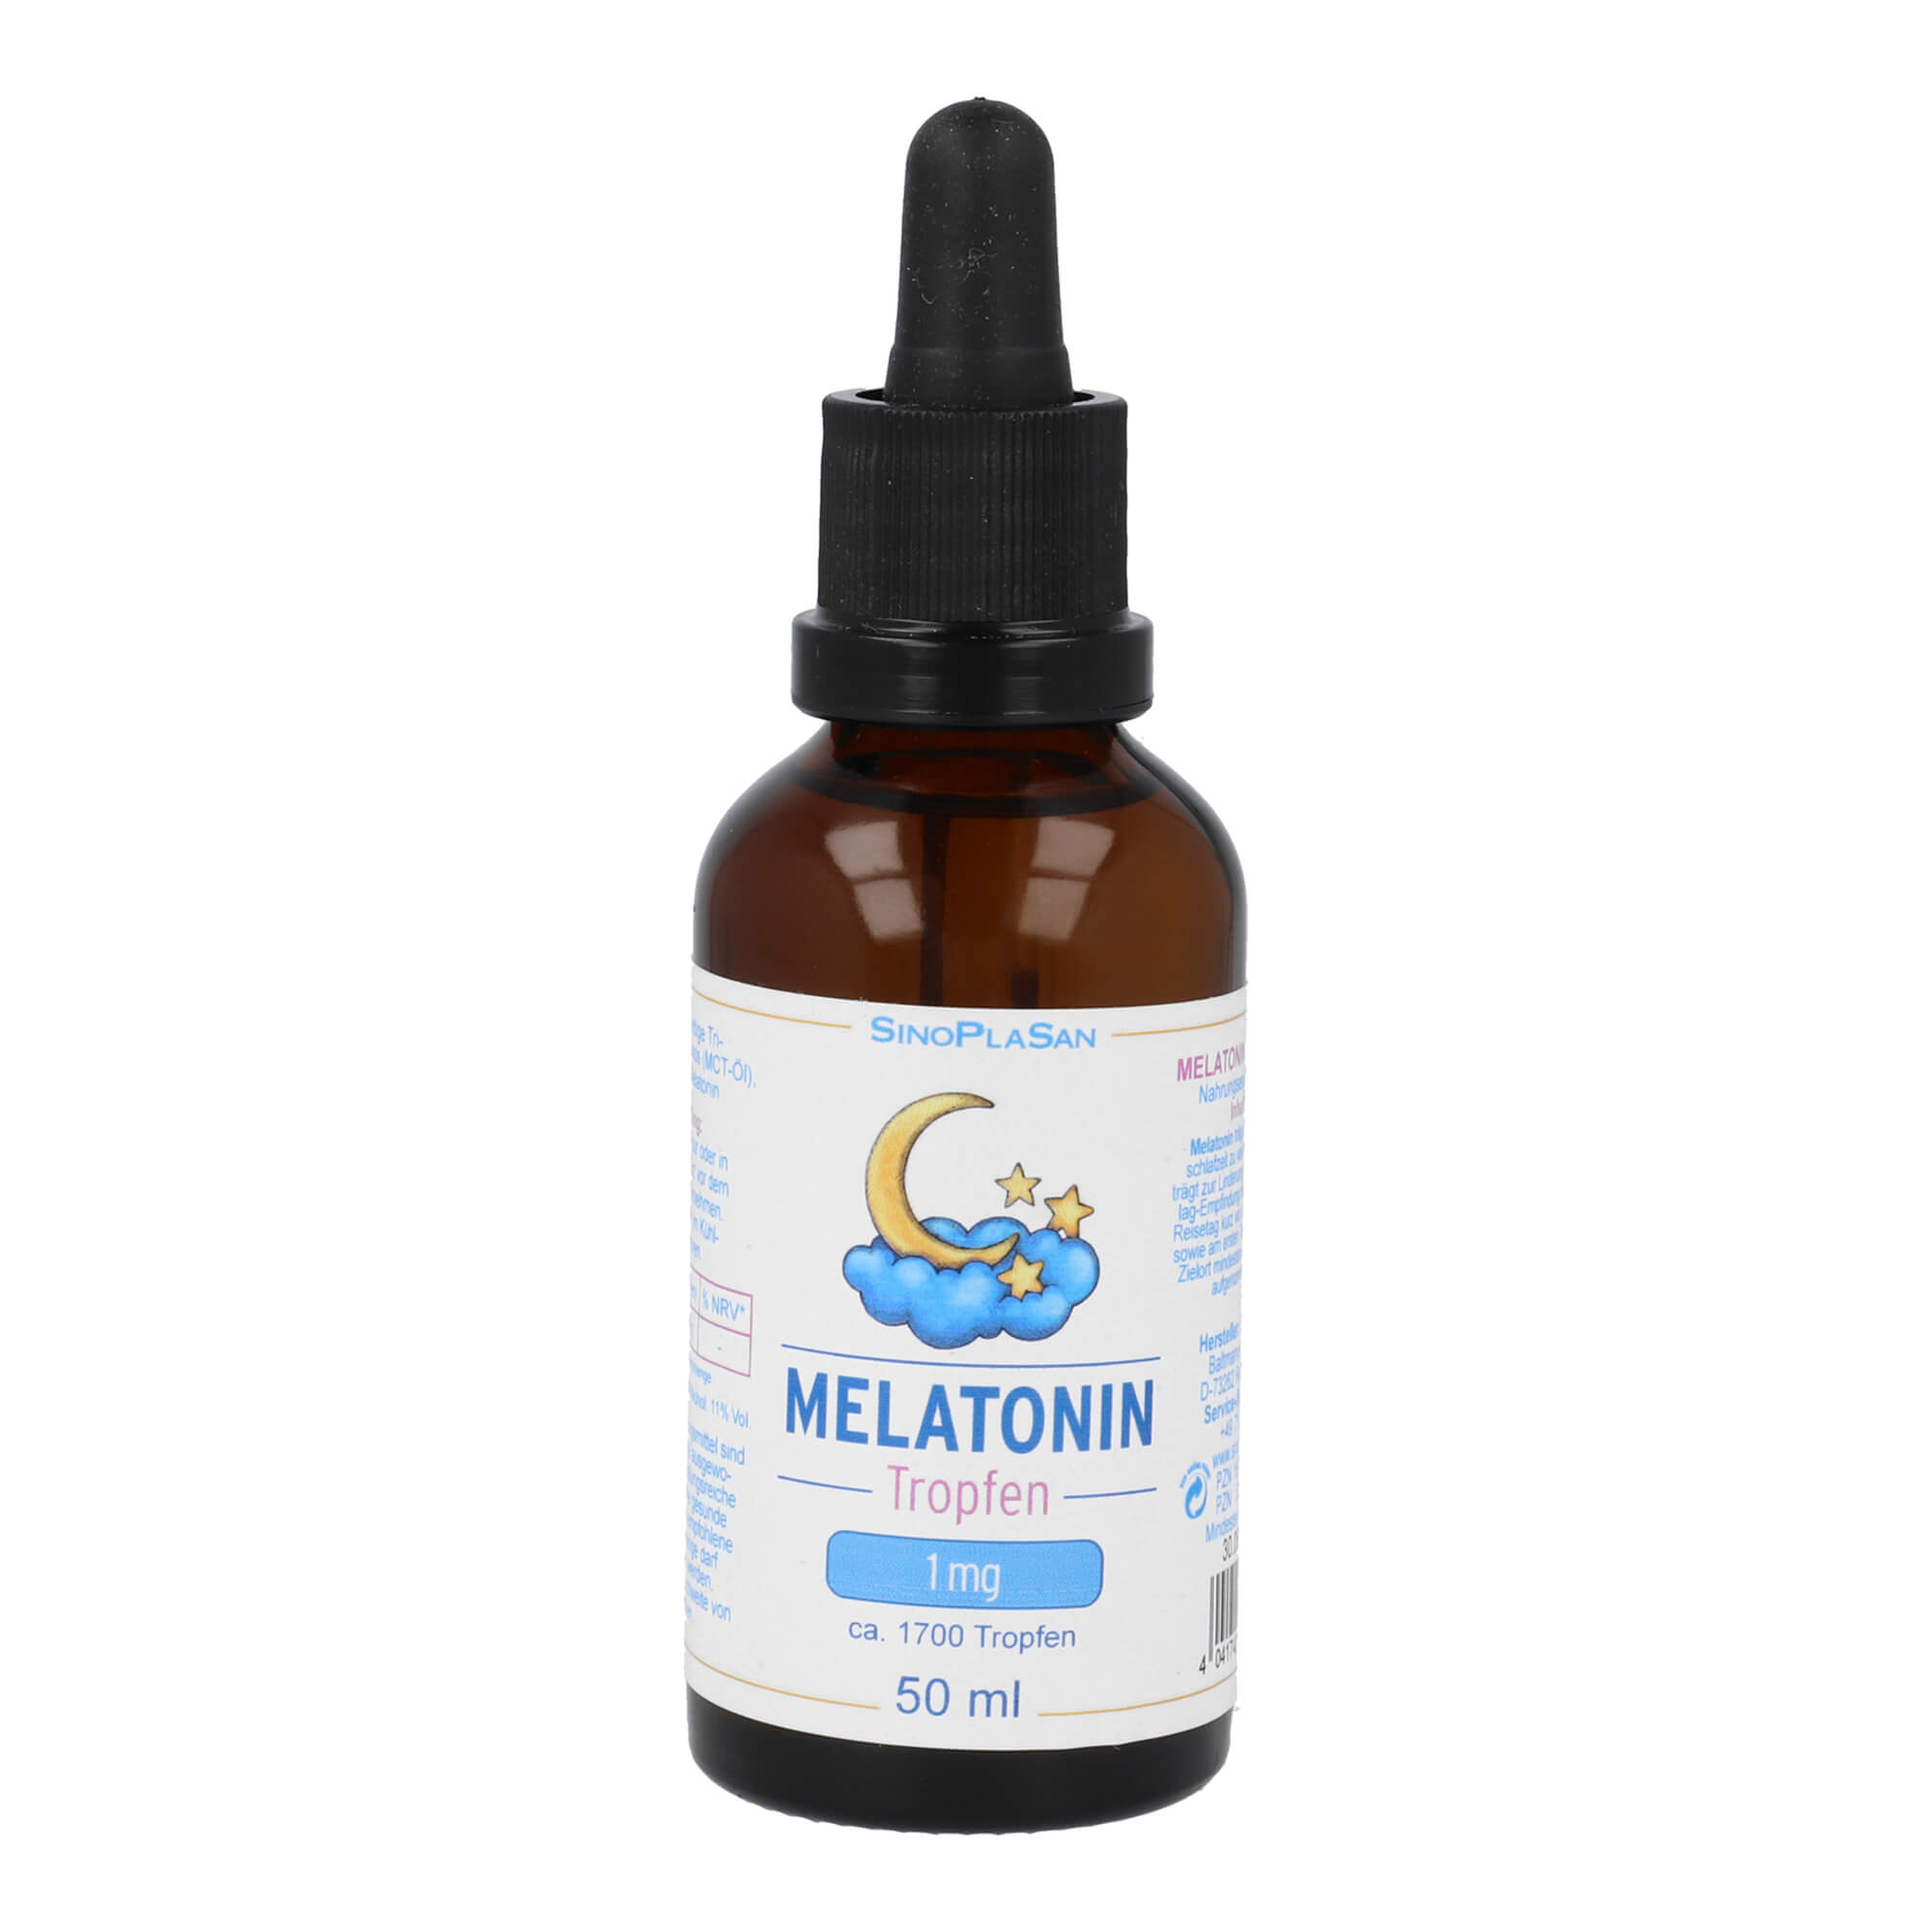 Nahrungsergänzungsmittel mit Melatonin. Enthält Alkohol: 11% Vol.